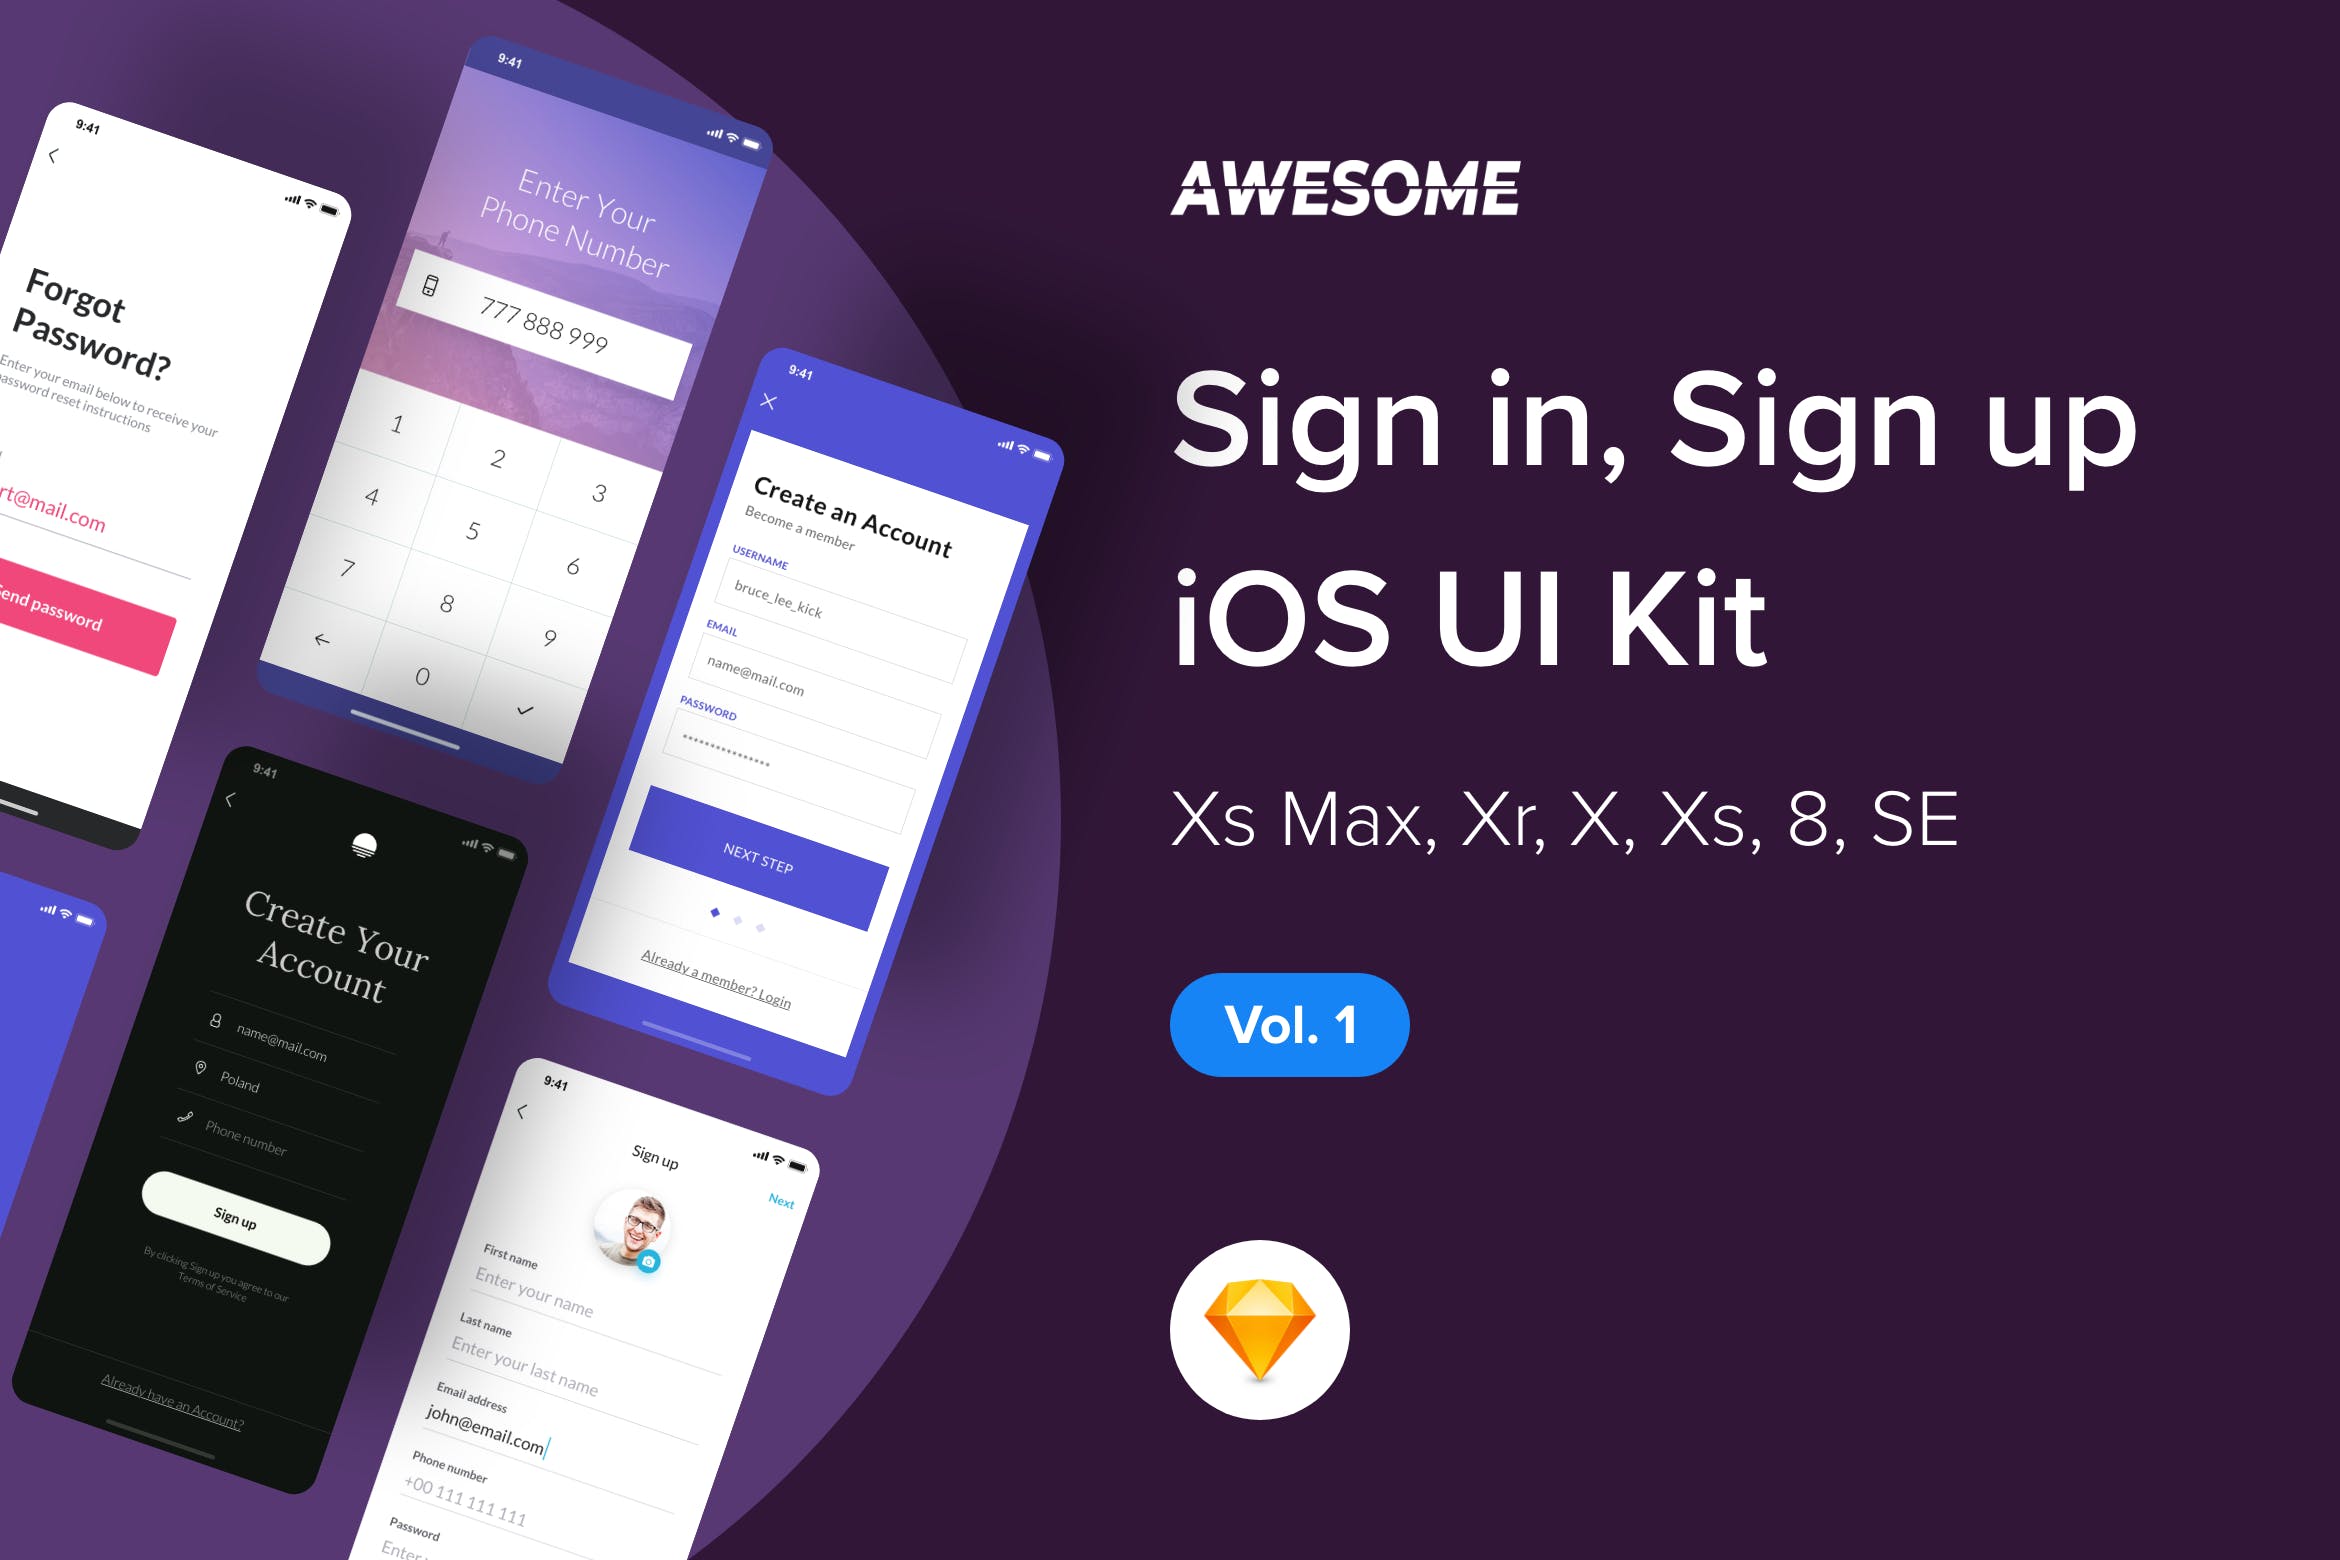 iOS平台APP应用注册登录界面设计UI套v1[Sketch] Awesome iOS UI Kit – Sign in / up Vol. 1 (Sketch)插图